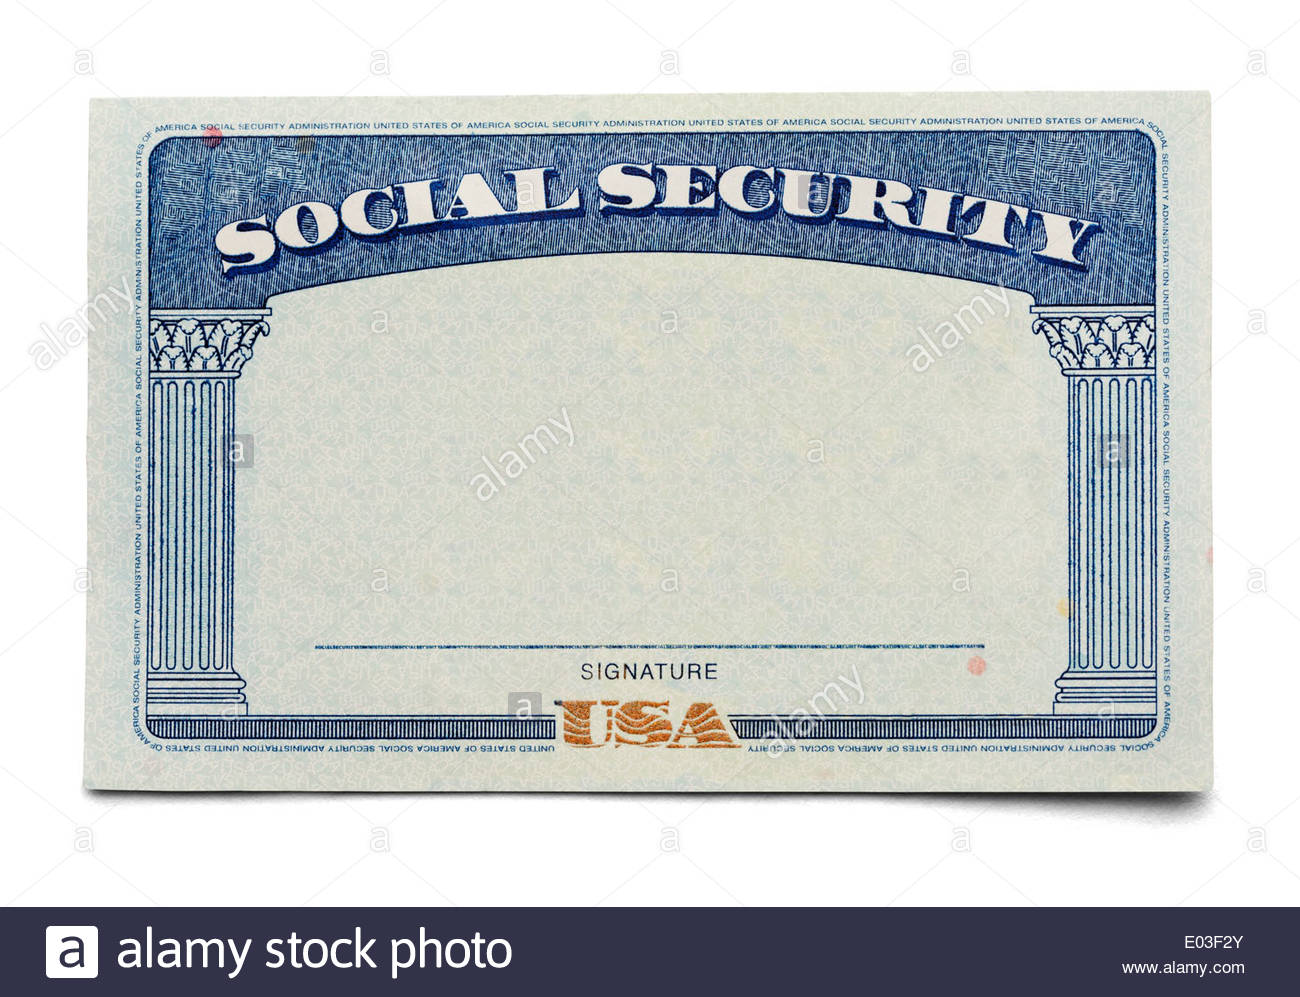 12-real-fake-social-security-card-templates-free